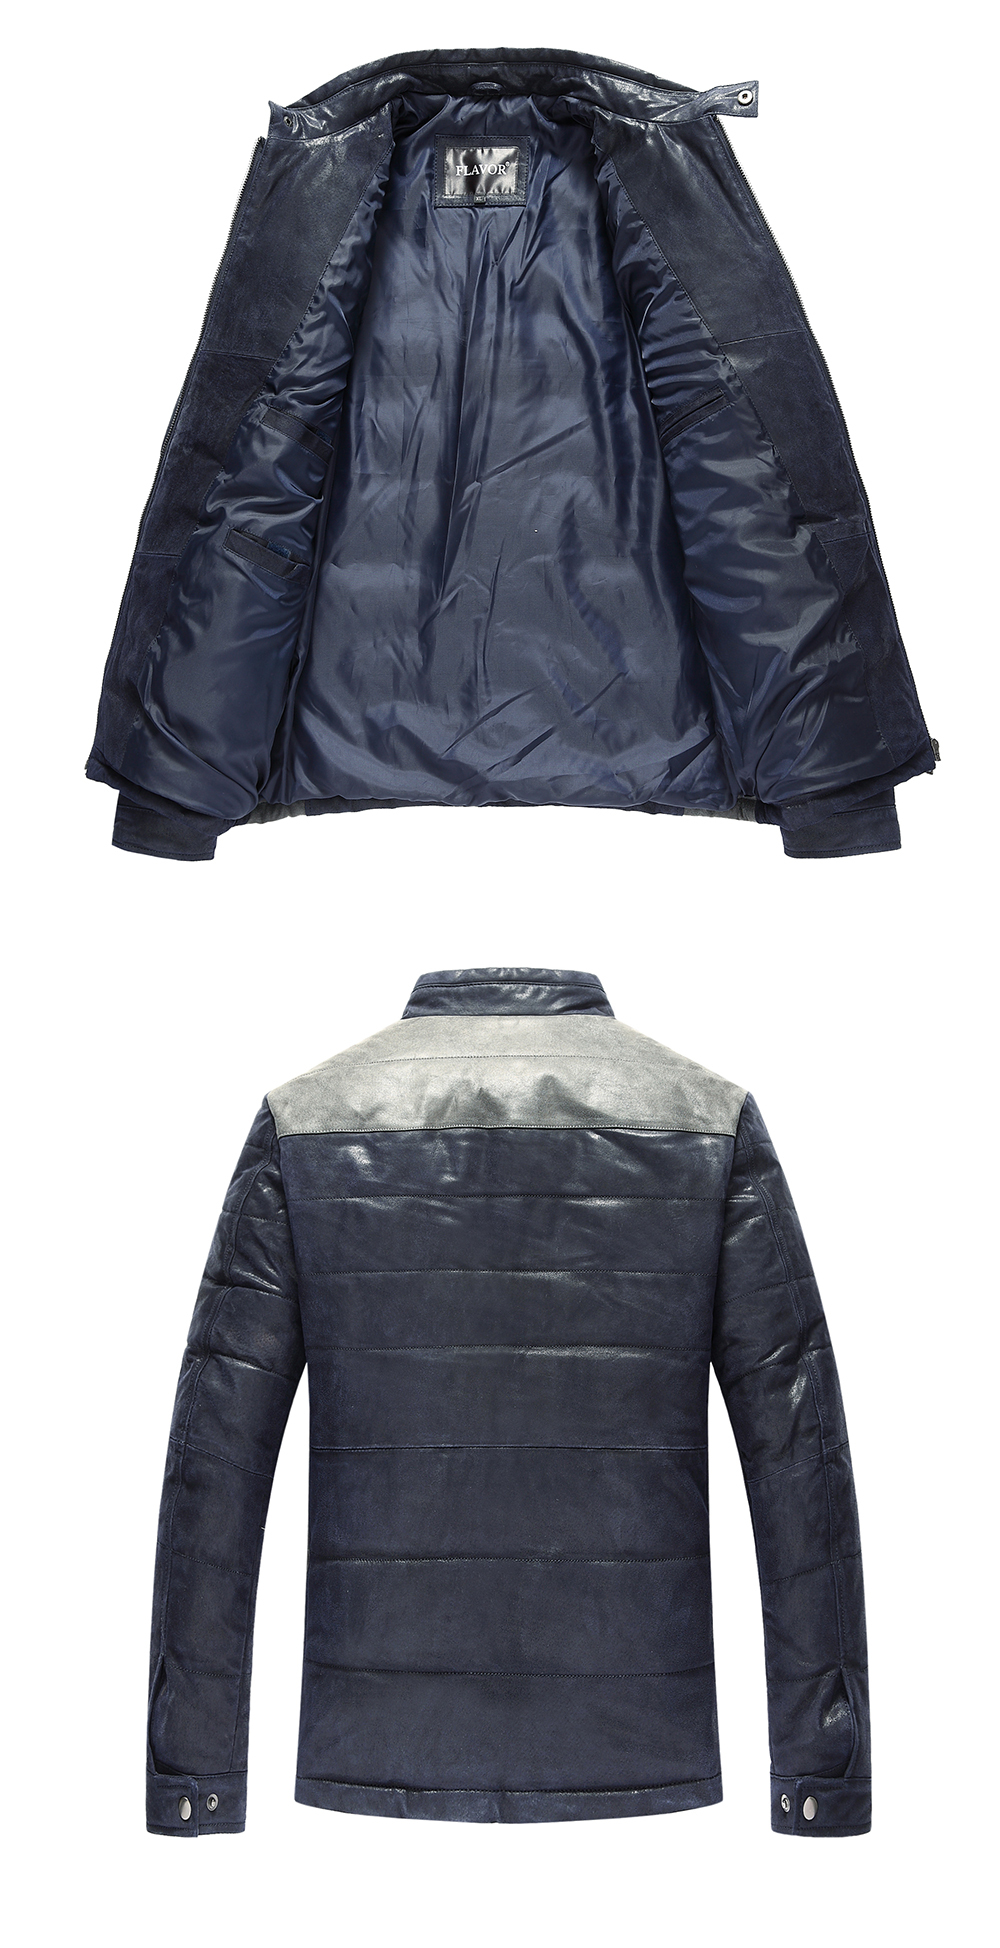 FLAVOR Men's Real Leather Jacket Pigskin Padding Cotton Genuine Leather Jacket FM2015-881 